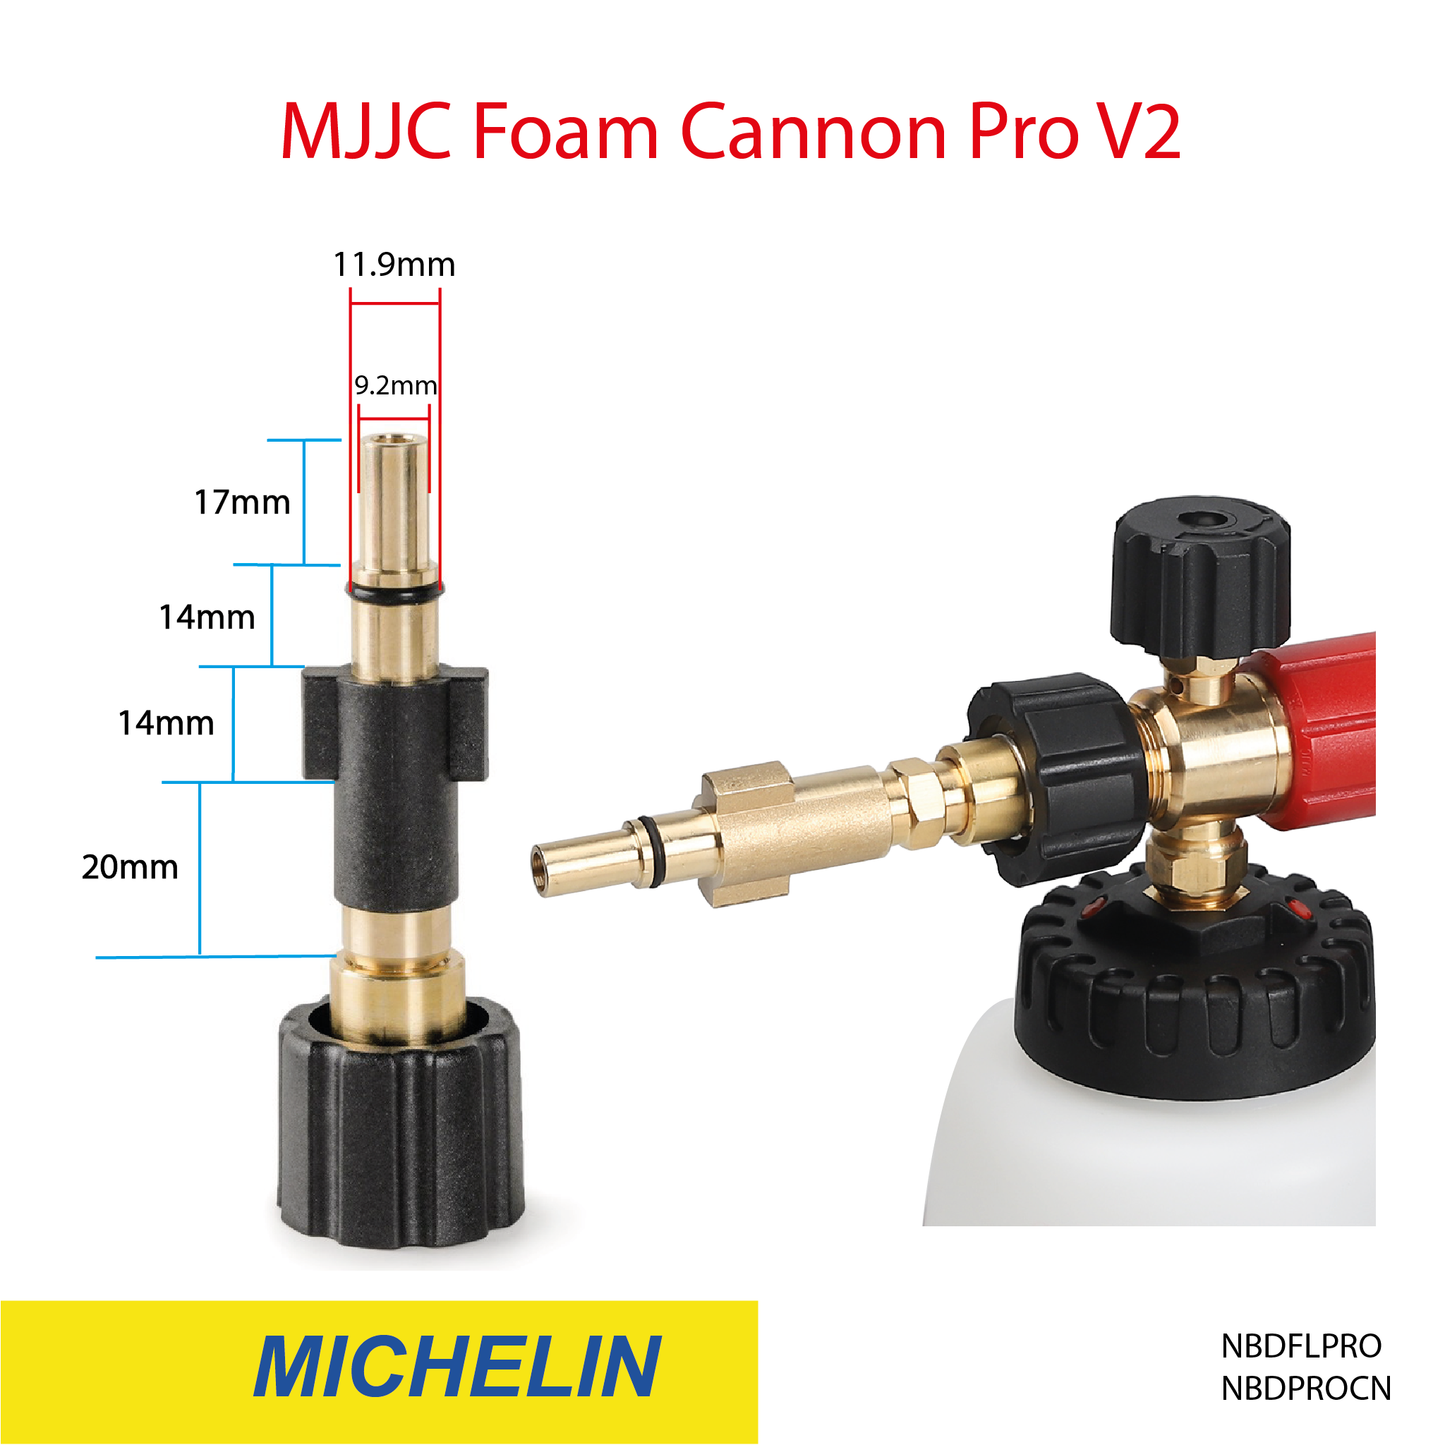 Michelin pressure washer - MJJC Foam Cannon Pro V2 (Pressure Washer Snow Foam Lance Gun)